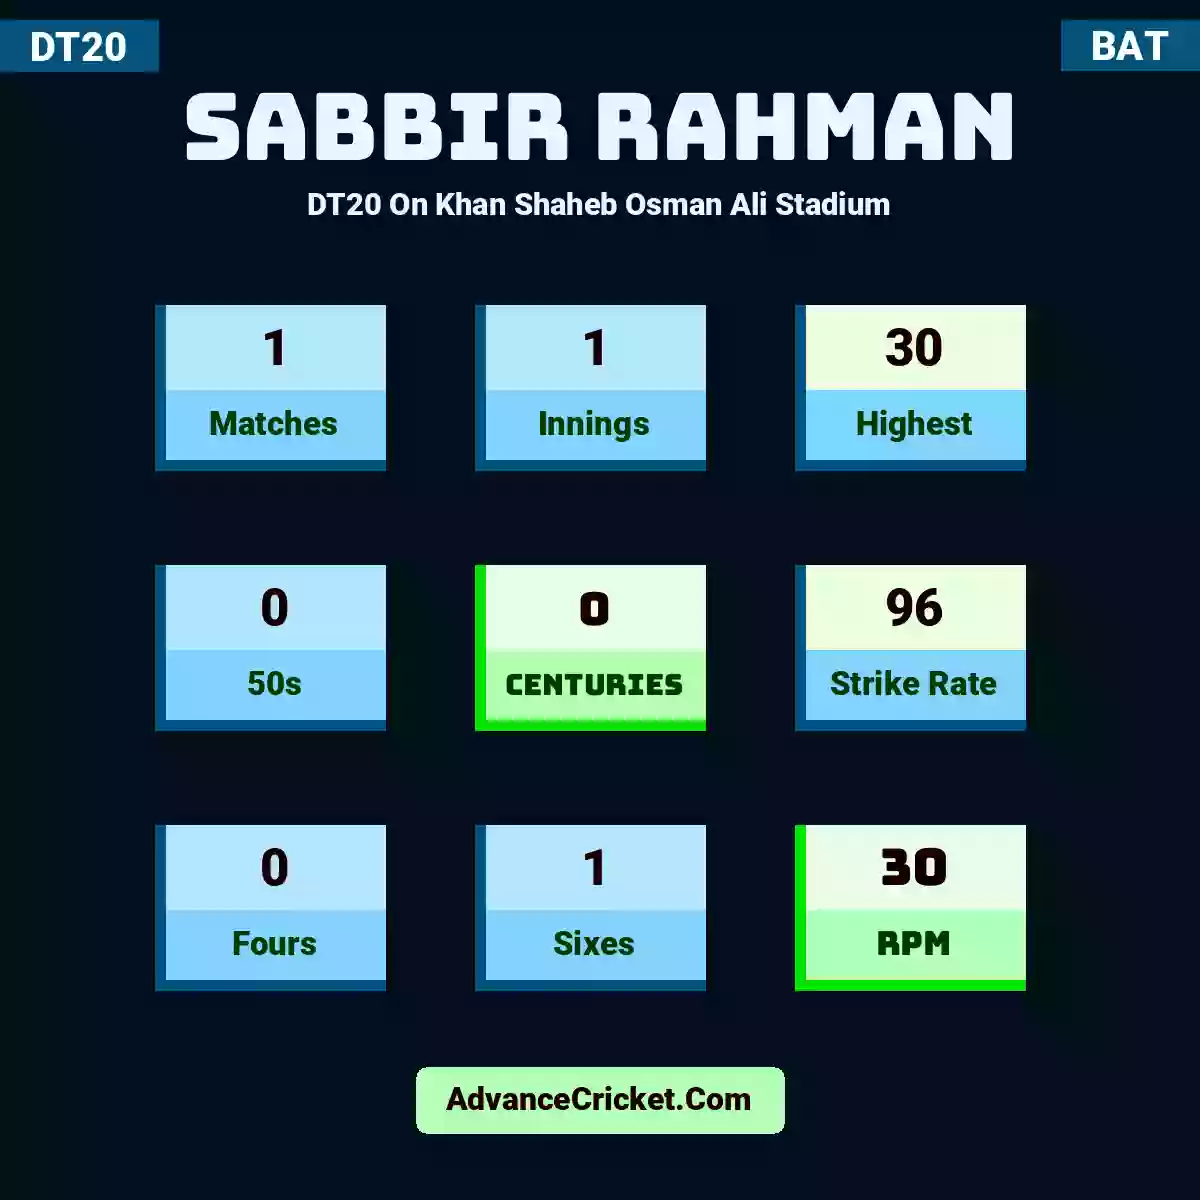 Sabbir Rahman DT20  On Khan Shaheb Osman Ali Stadium, Sabbir Rahman played 1 matches, scored 30 runs as highest, 0 half-centuries, and 0 centuries, with a strike rate of 96. S.Rahman hit 0 fours and 1 sixes, with an RPM of 30.